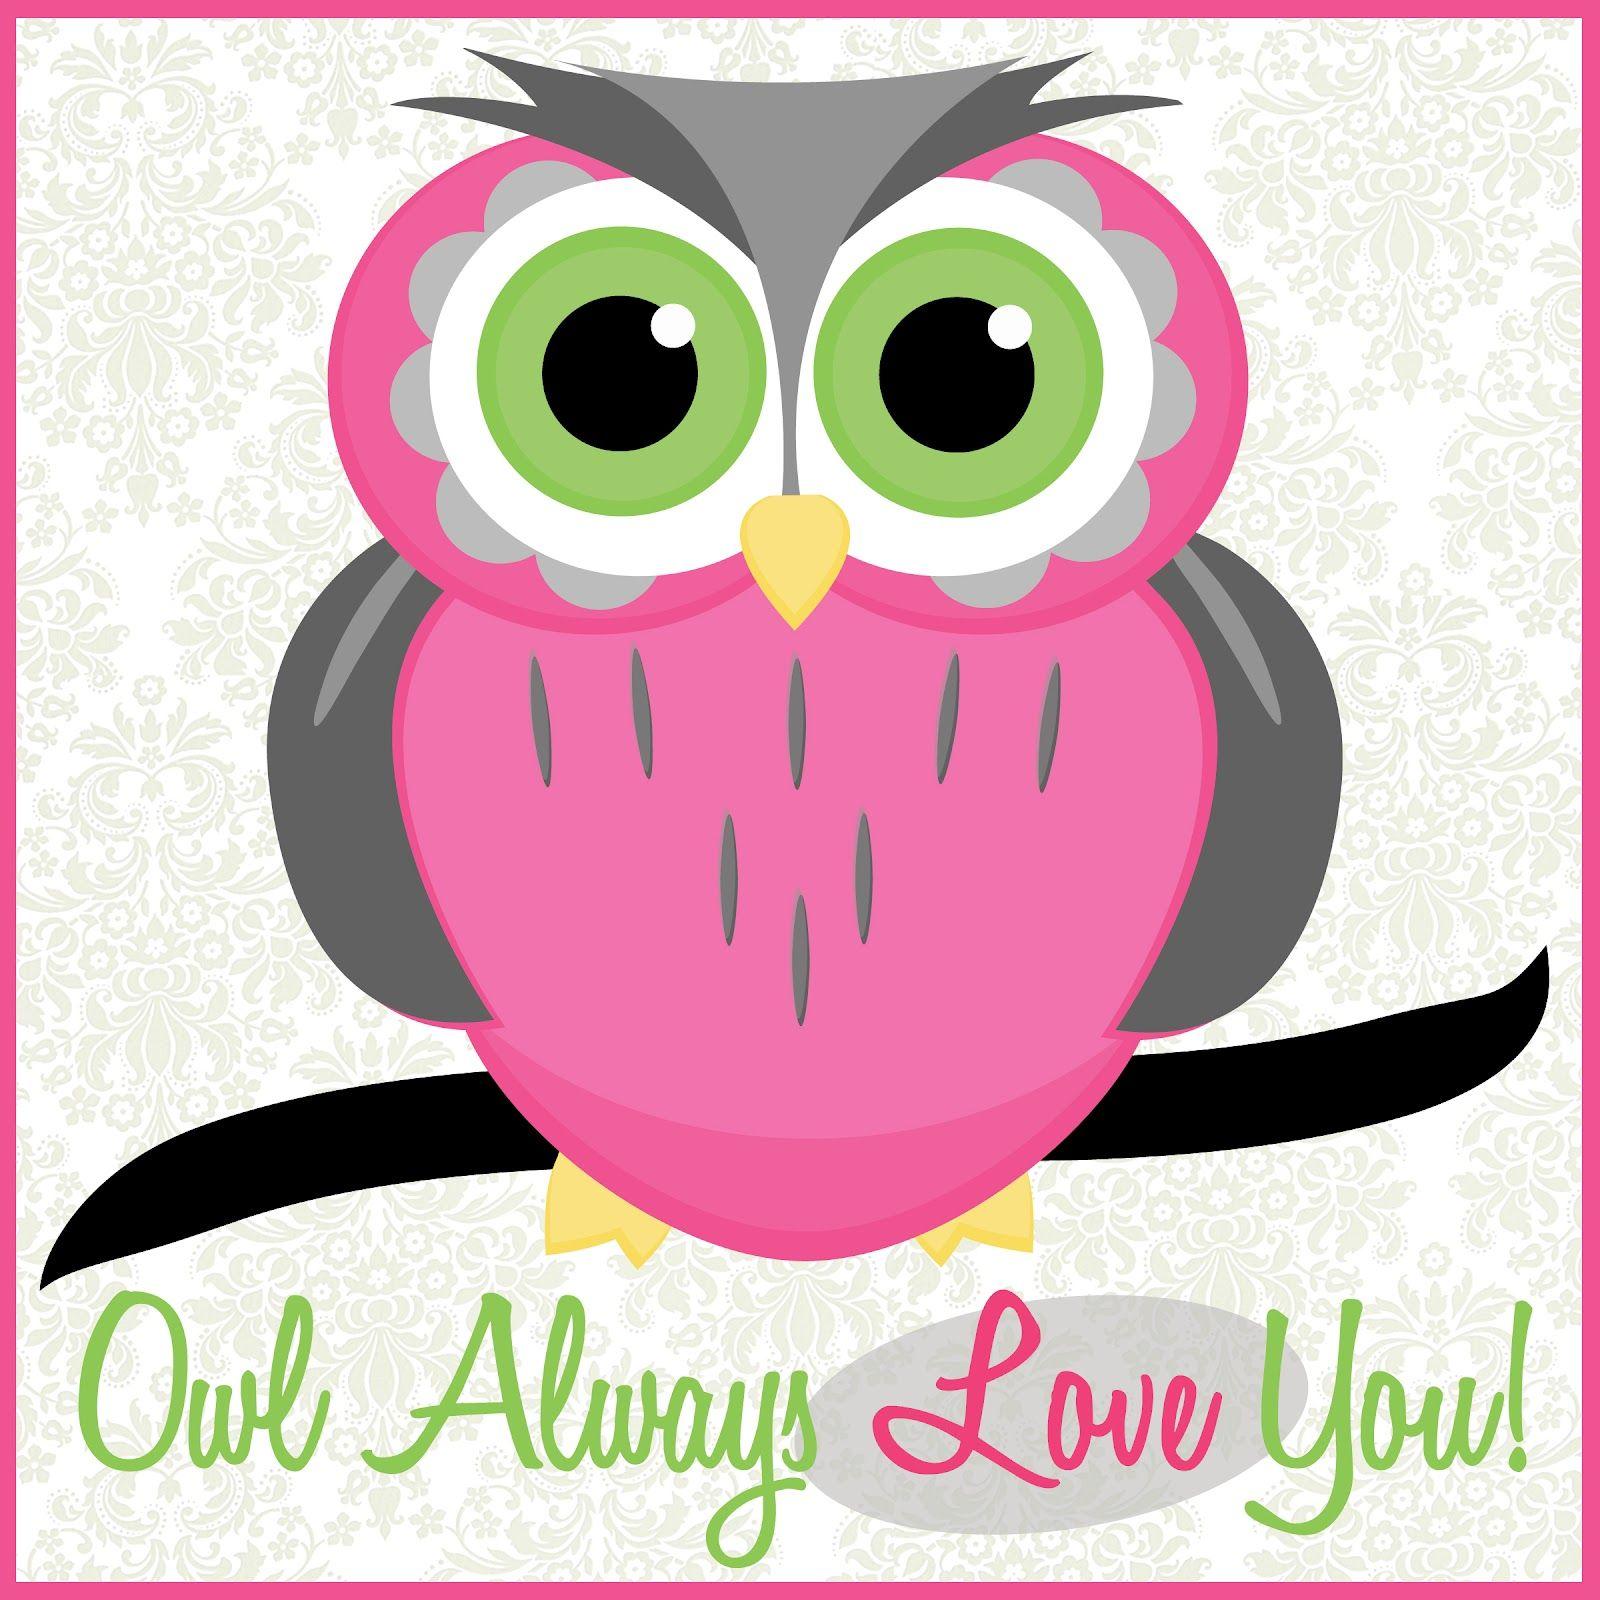 Free Mac Wallpaper HD Cartoon Owl Wallpaper. Owls. Owl